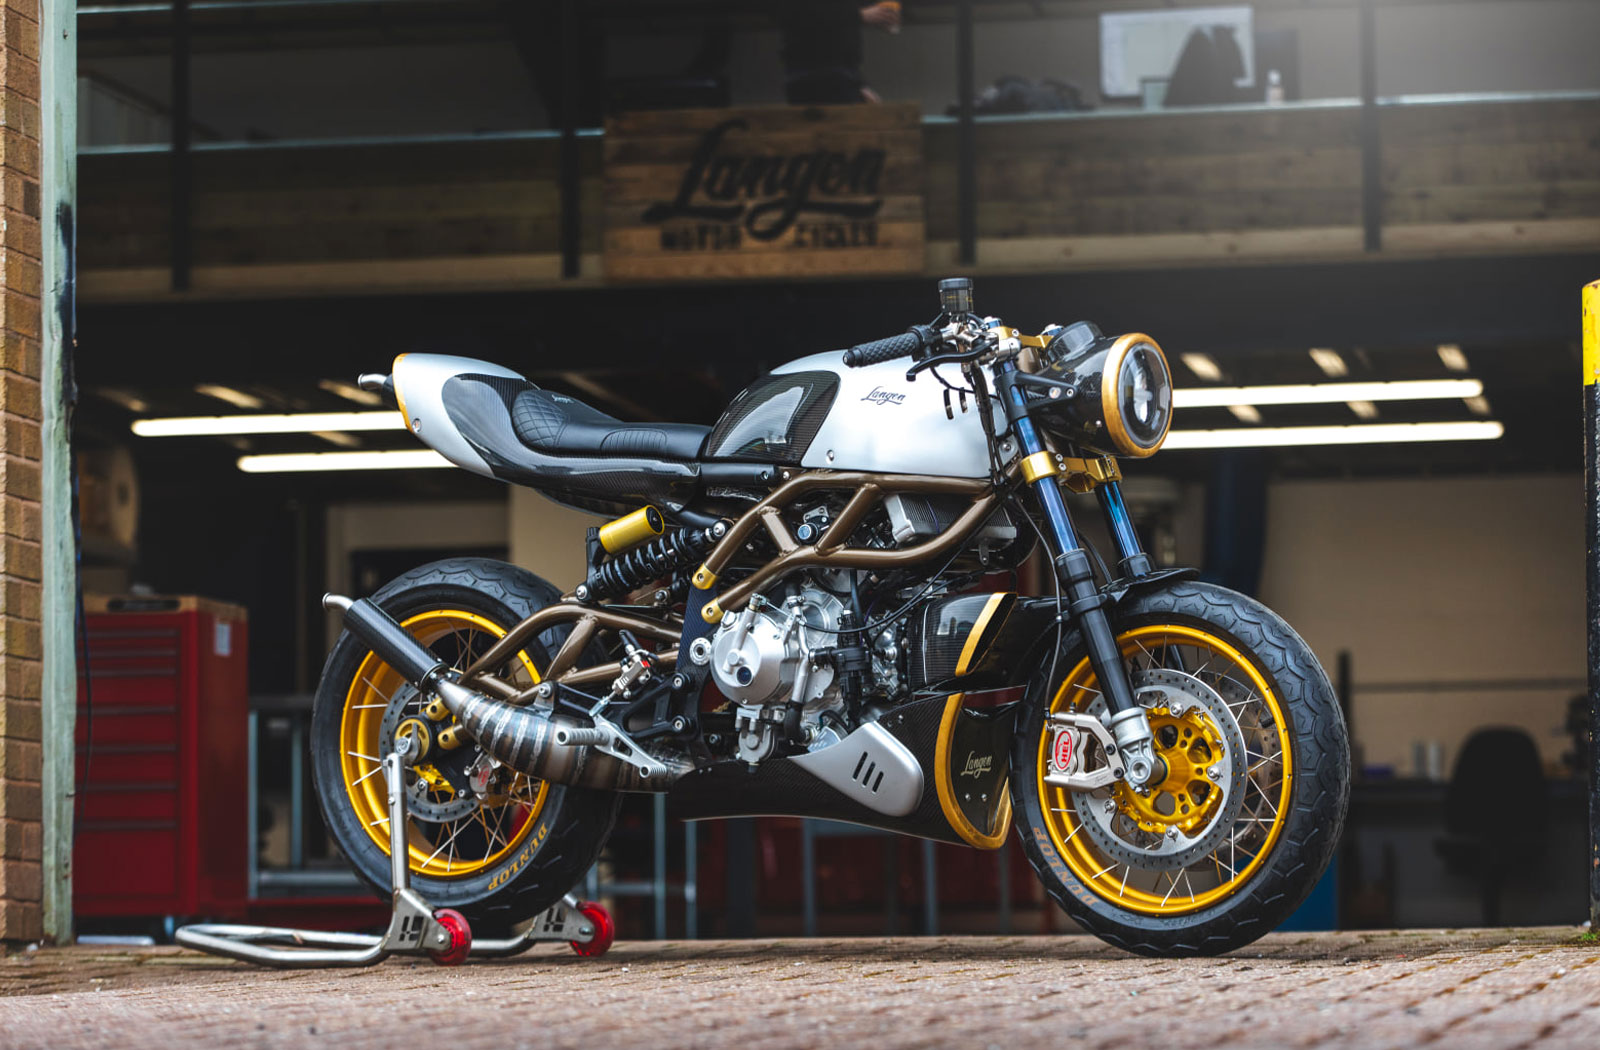 Langen Two Stroke cafe racer motorcycle